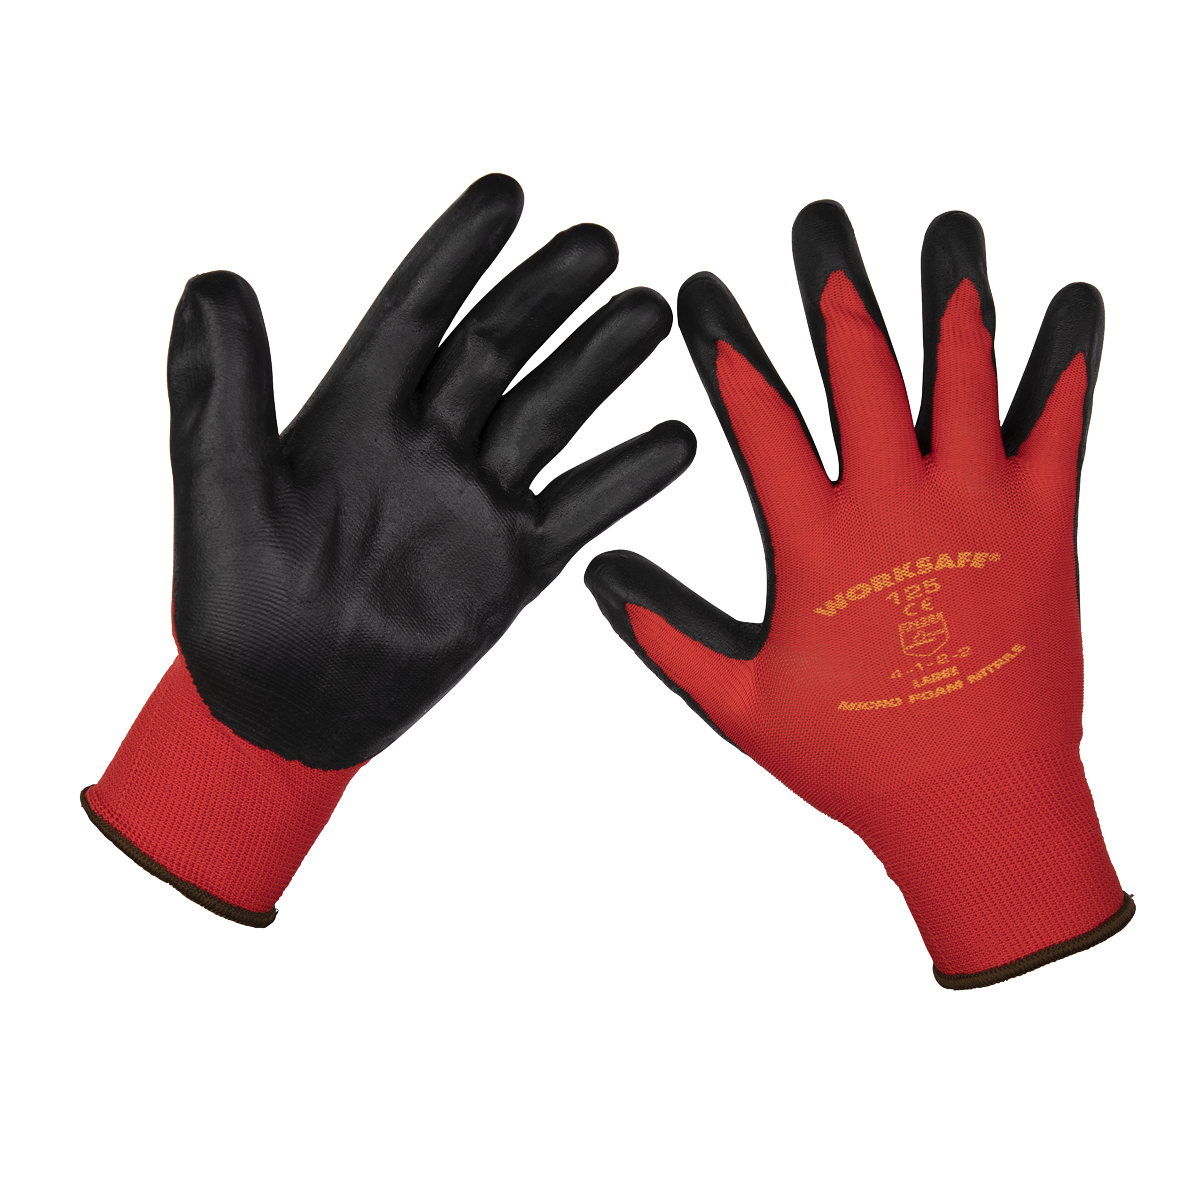 Flexi Grip Nitrile Palm Gloves (Large) - Pack of 12 Pairs - 9125L/12 - Farming Parts